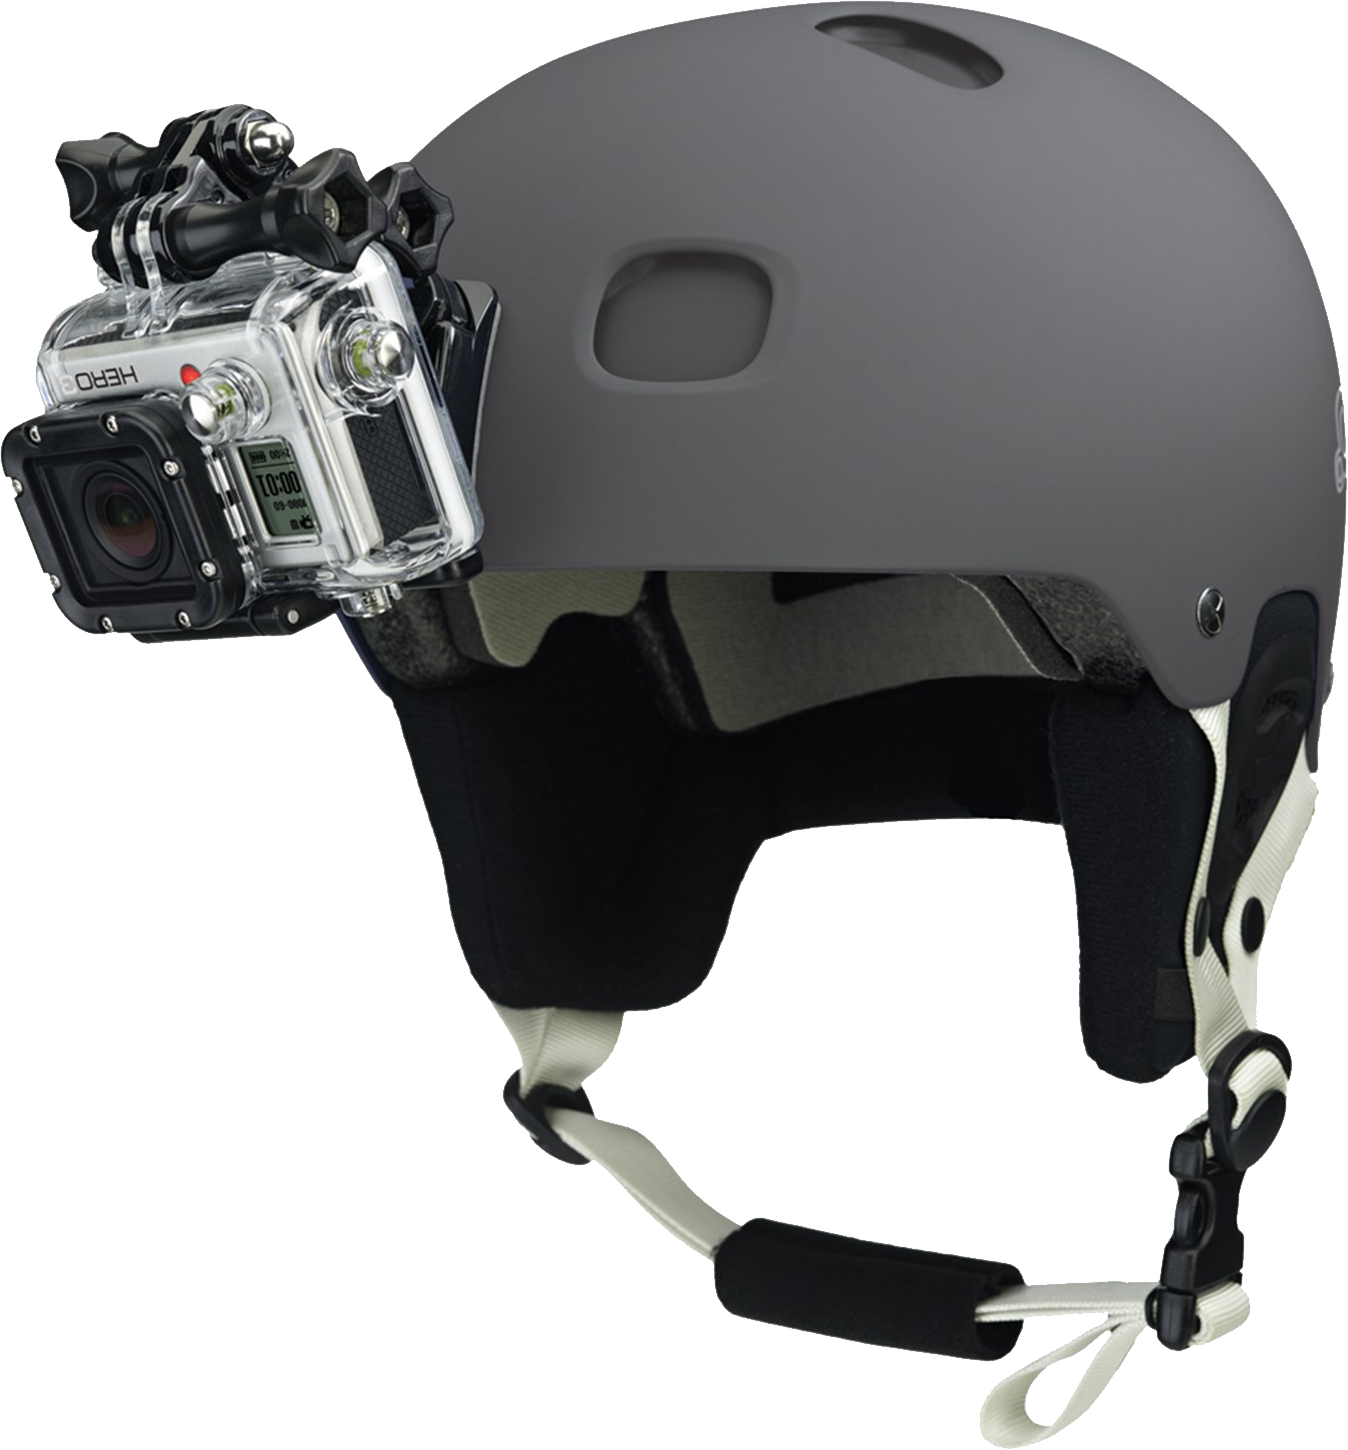 Câmera GoPro no capacete